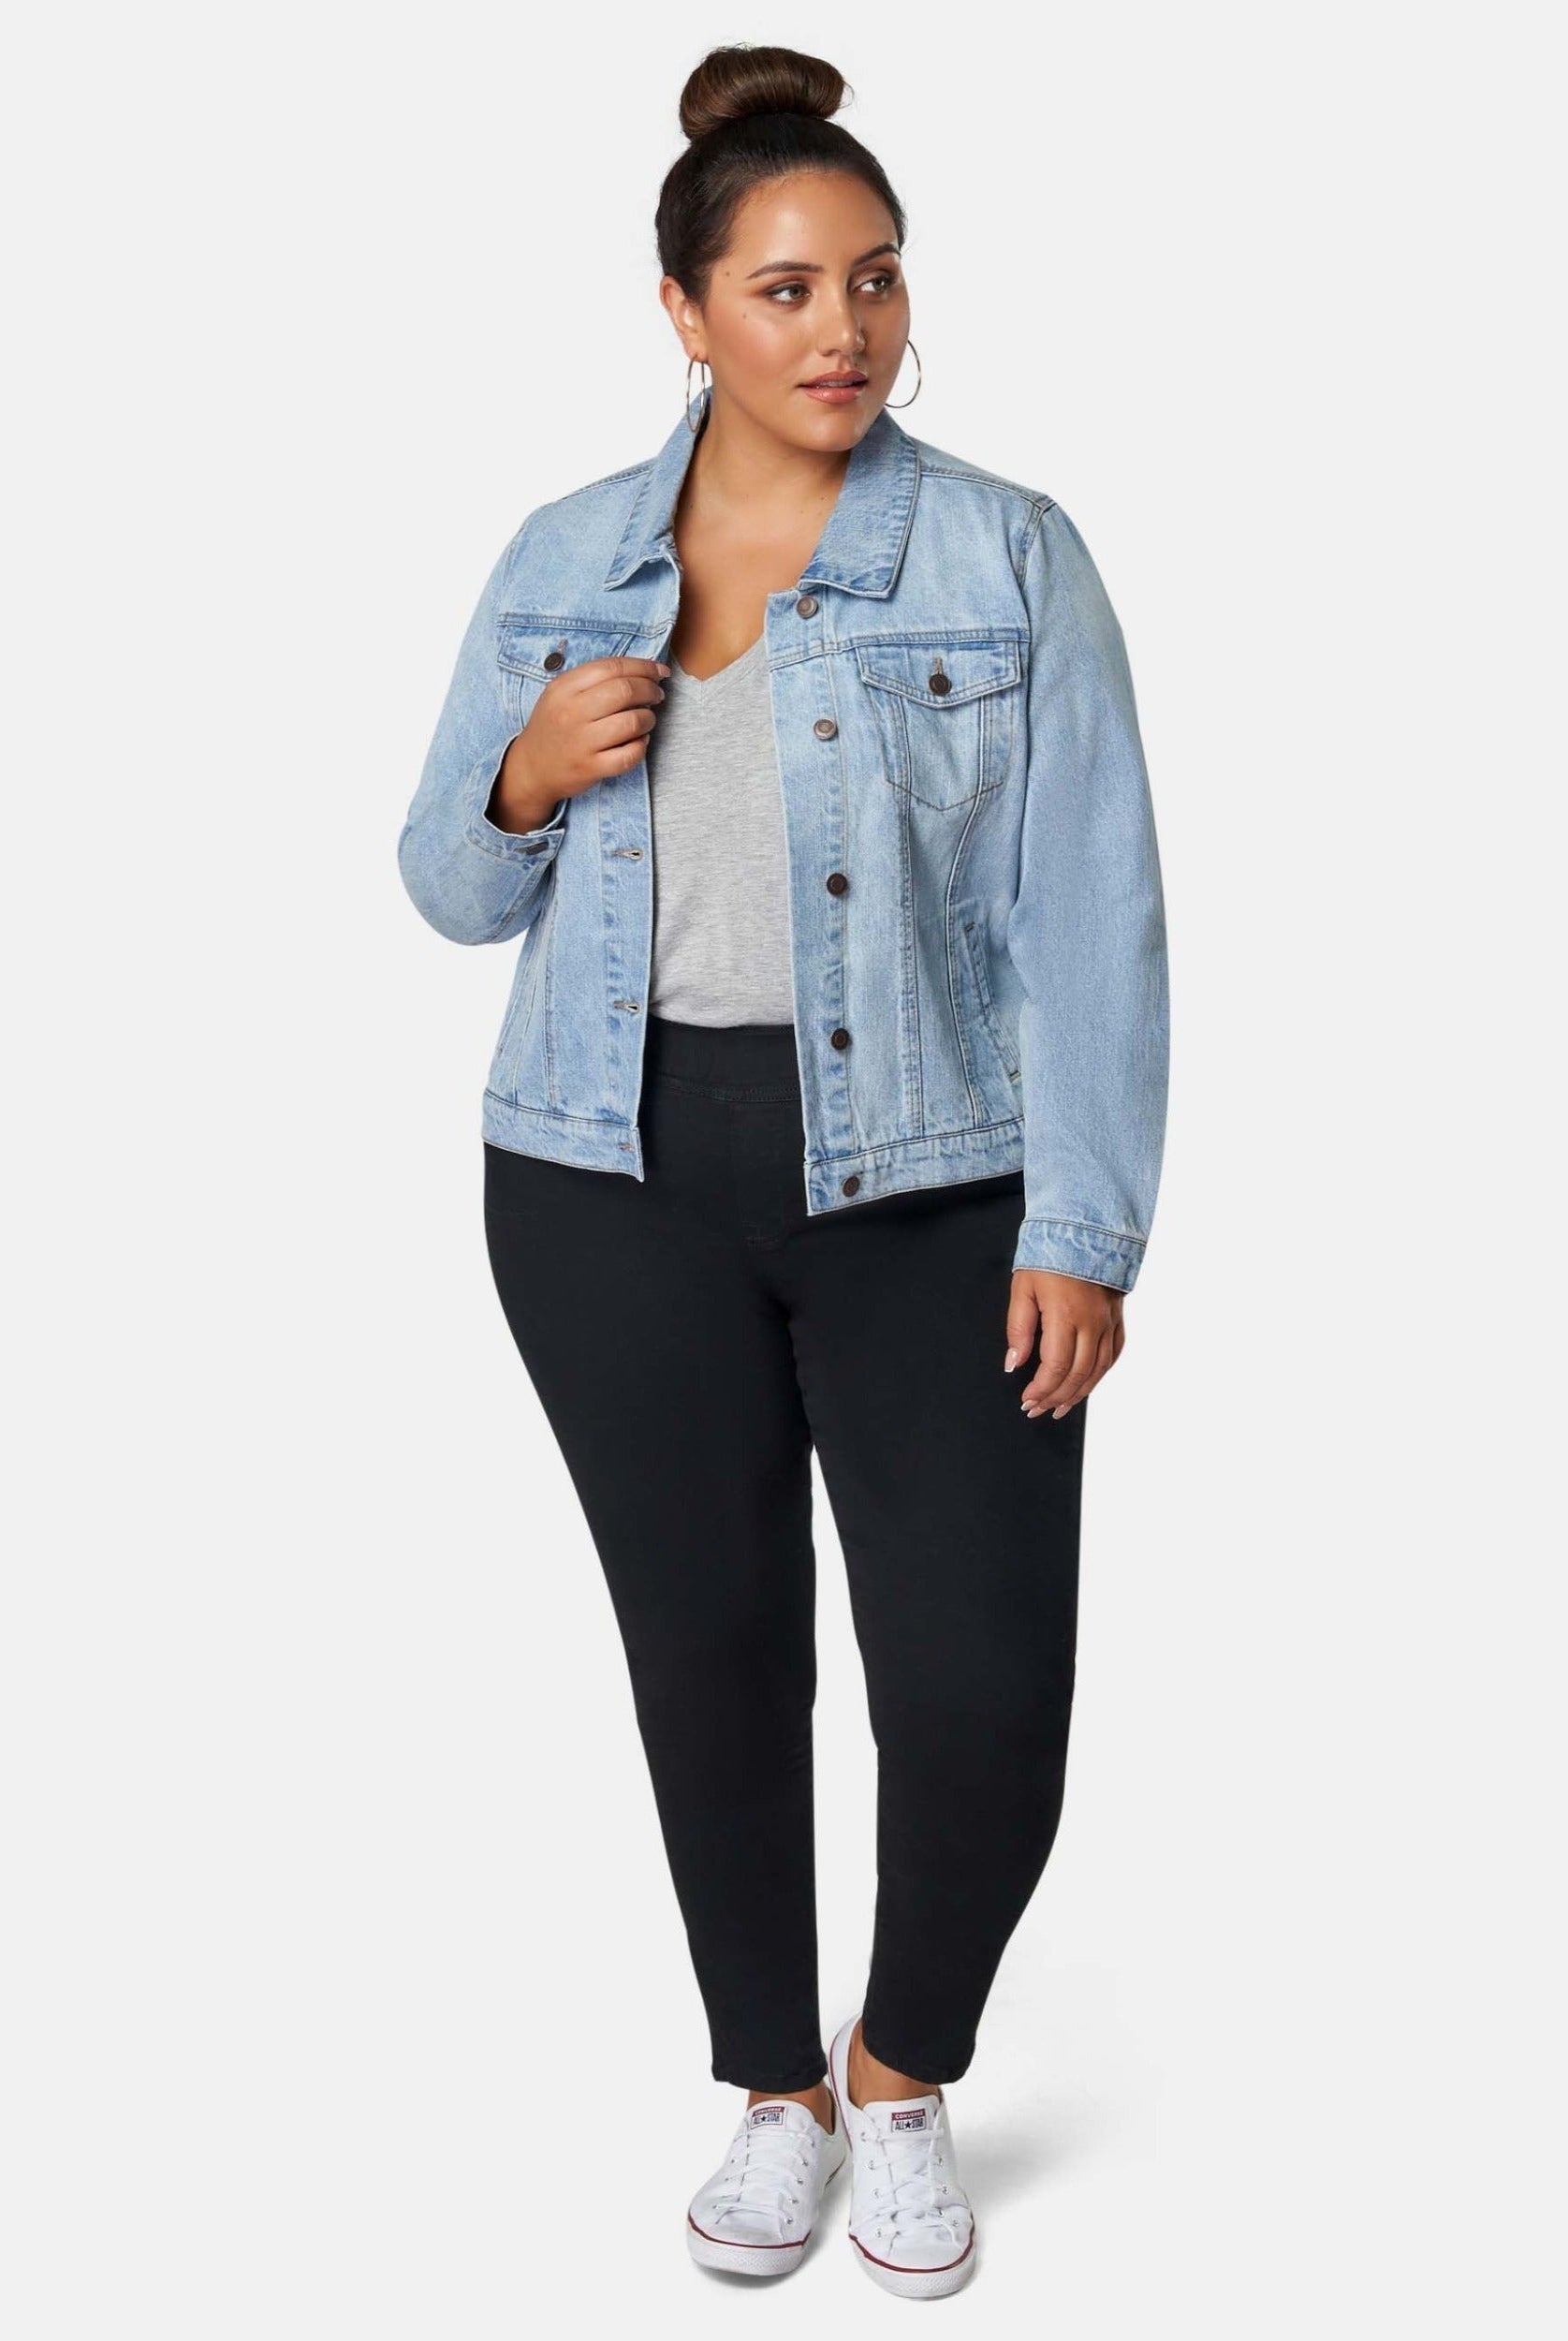 Curvy Model wearing black skinny jeans, grey top and denim jacket